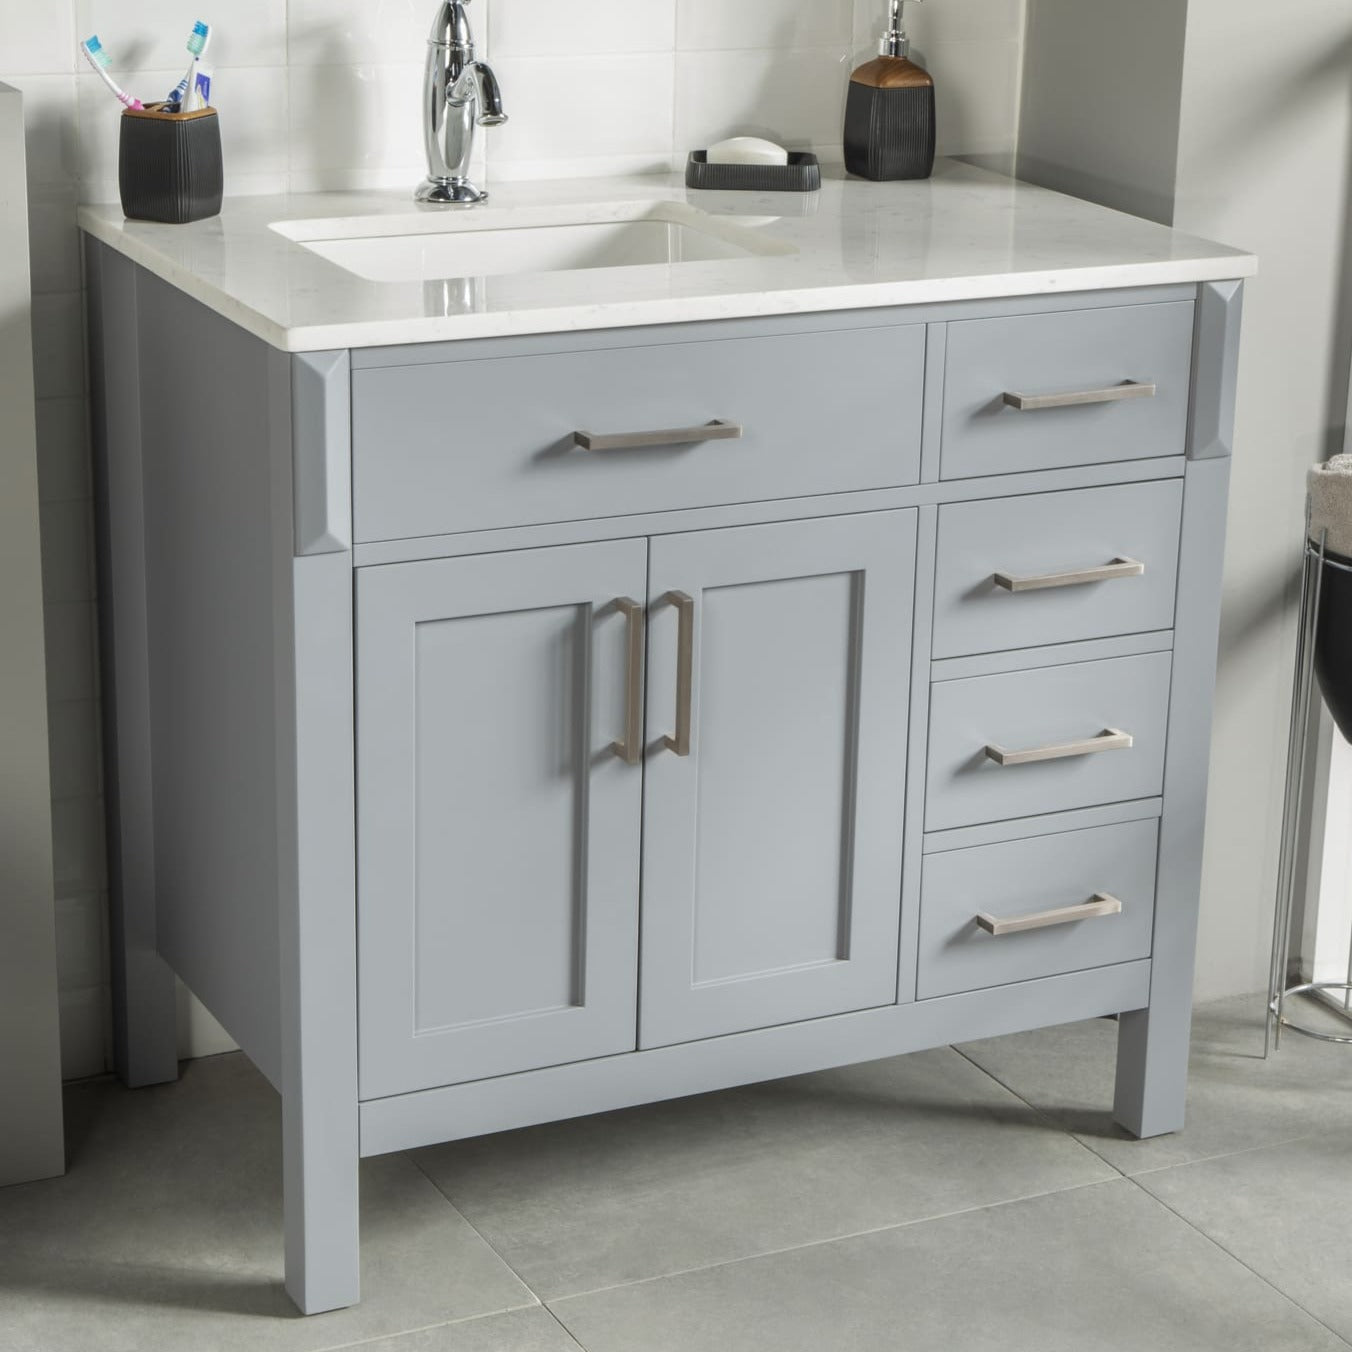 Fawna Bathroom Vanity Homelero 36"  #size_36"  #color_grey  #hardware_brushed nickel